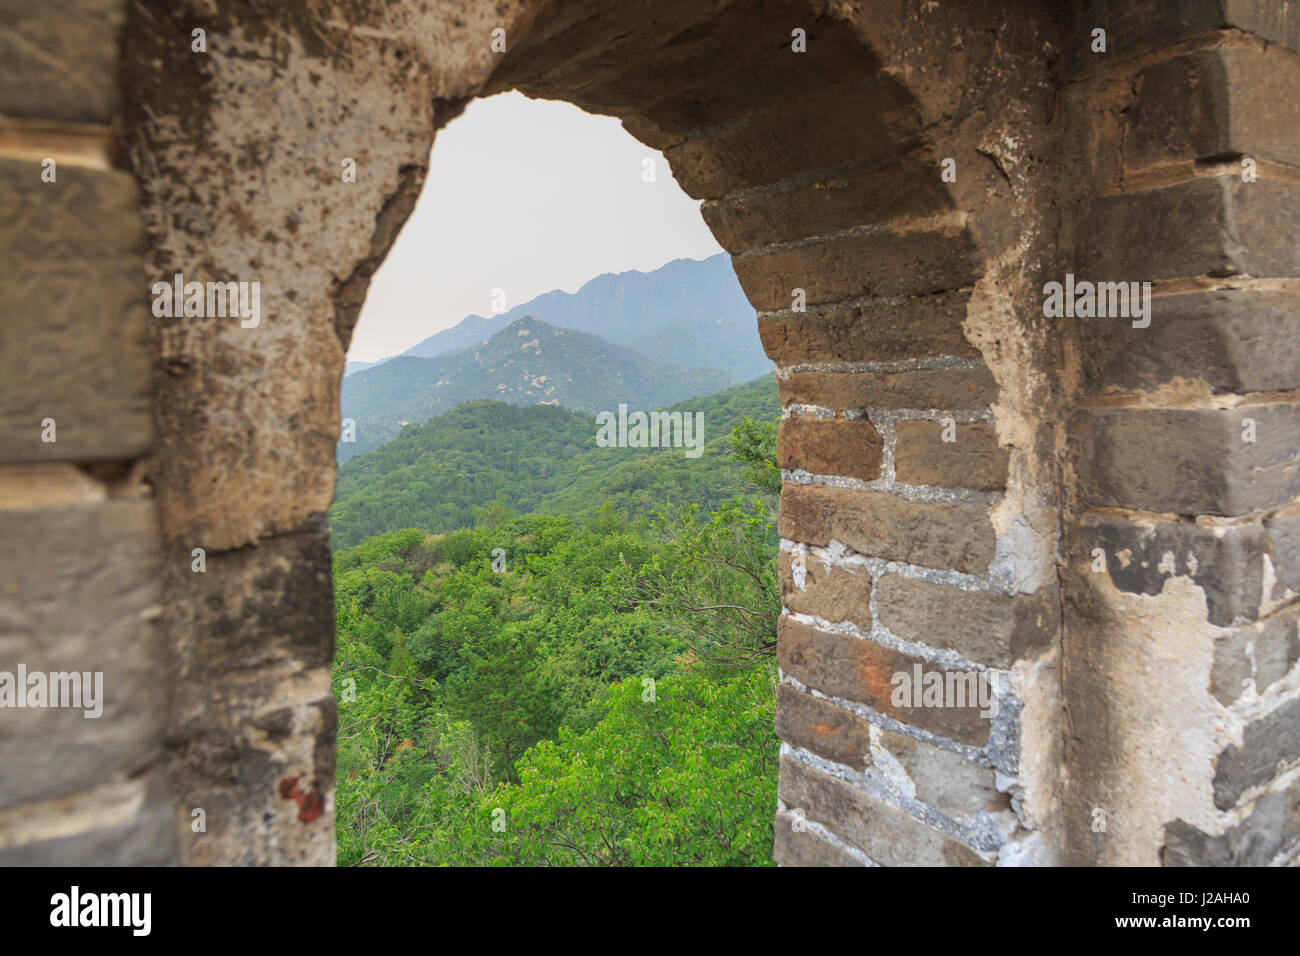 Die große Mauer, moderne Seven Wonders Of The World, Qianjiadian Scenic Area, East Teil von Yanqing Geopark, in der Nähe von Peking, China Stockfoto